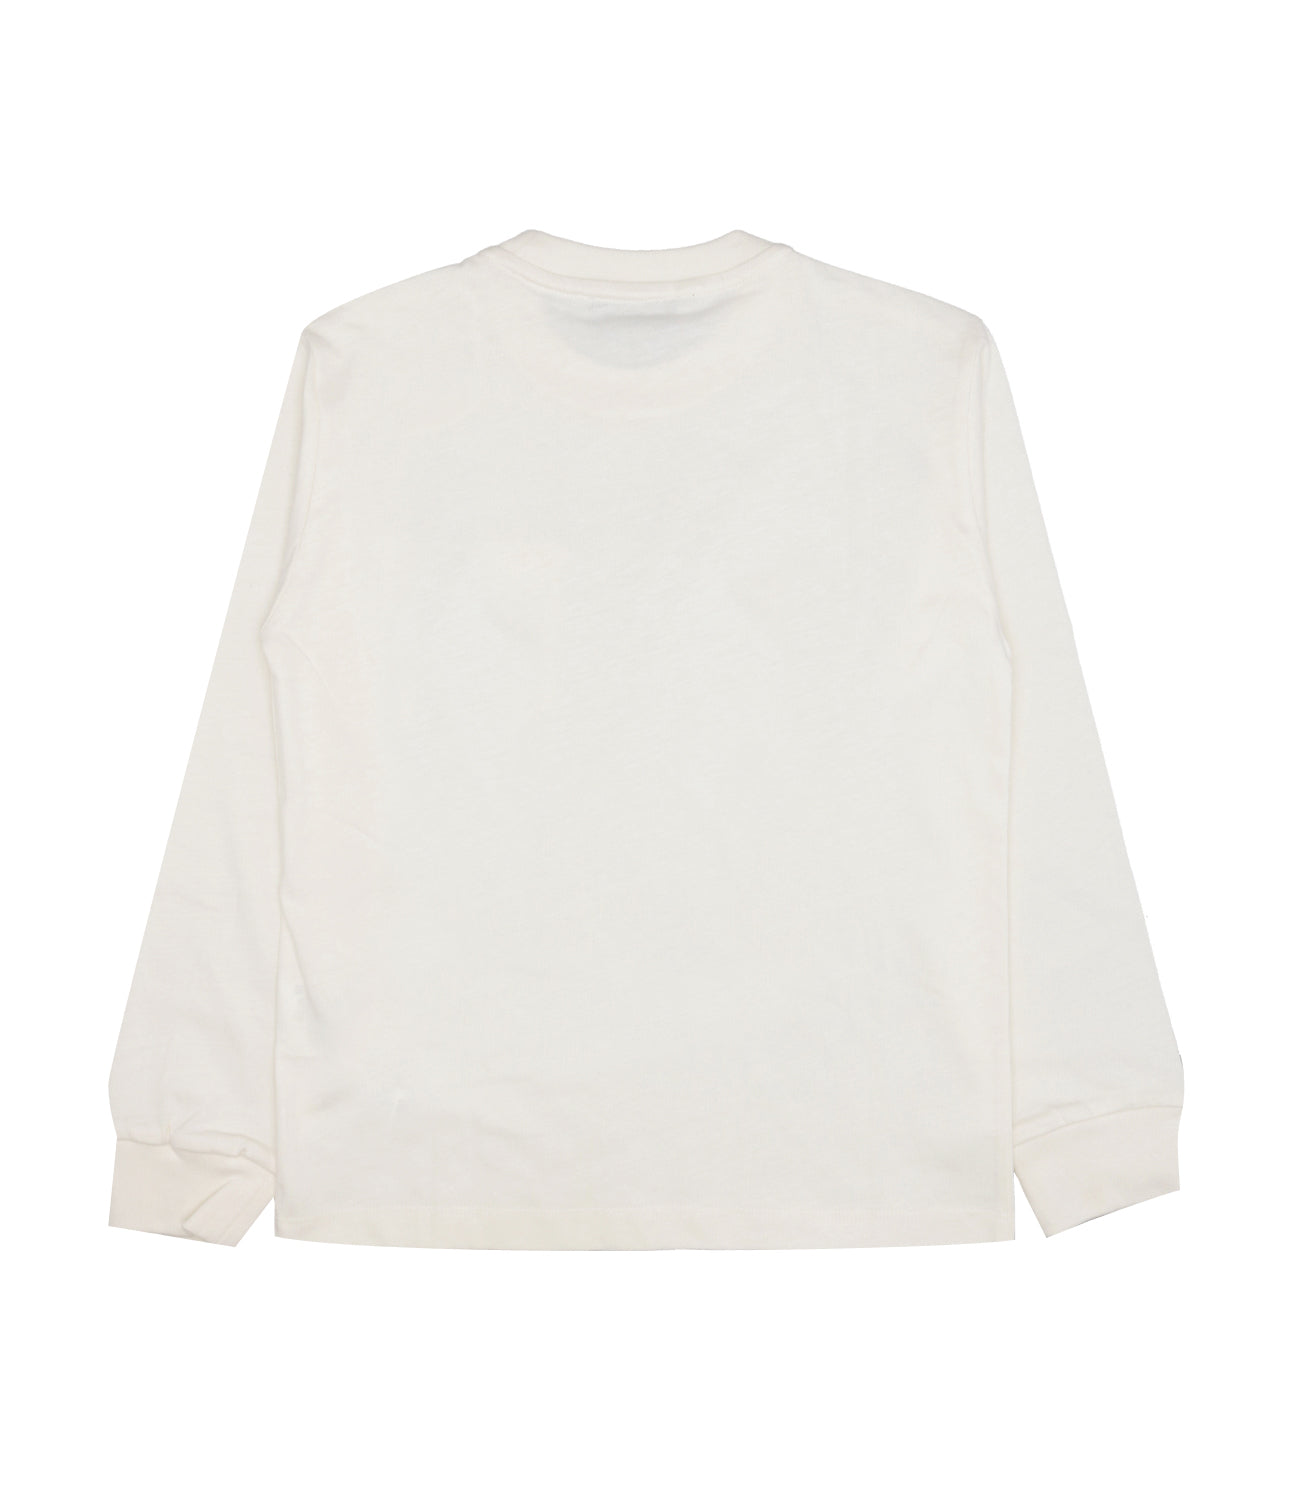 Dondup Junior | White T-Shirt